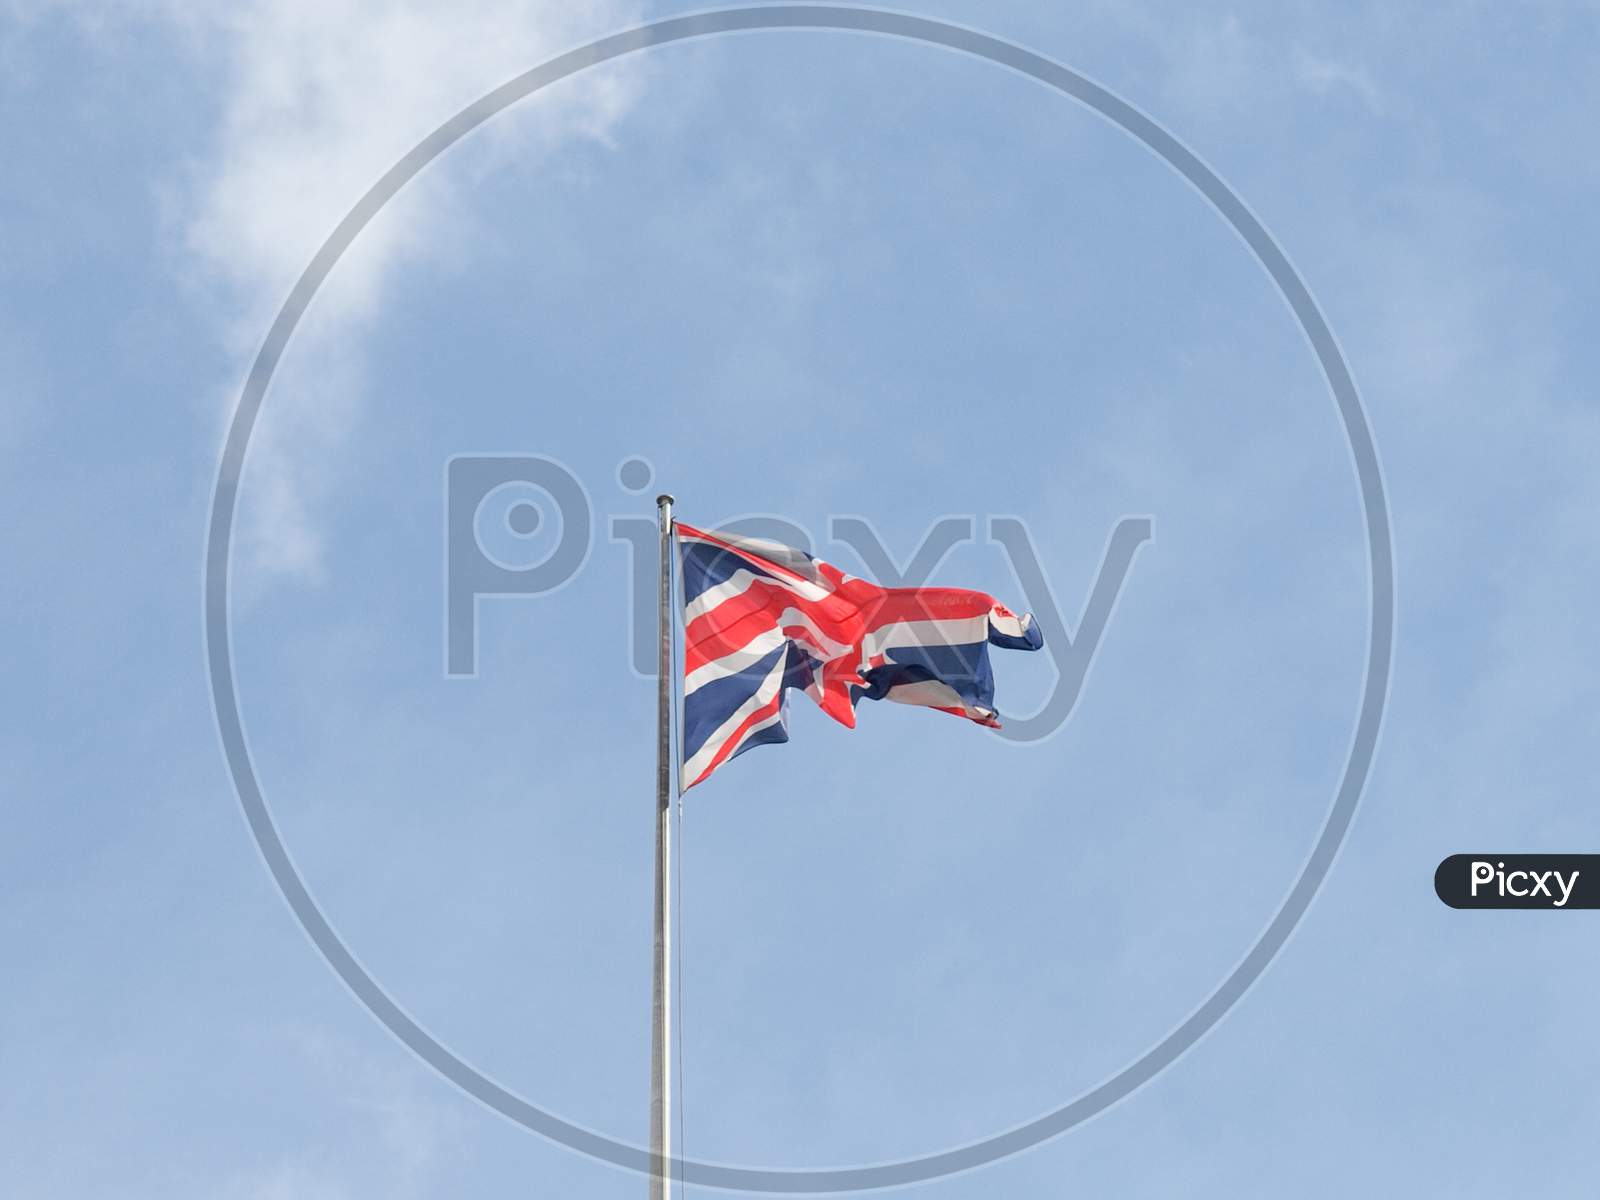 Uk Flag Over Blue Sky